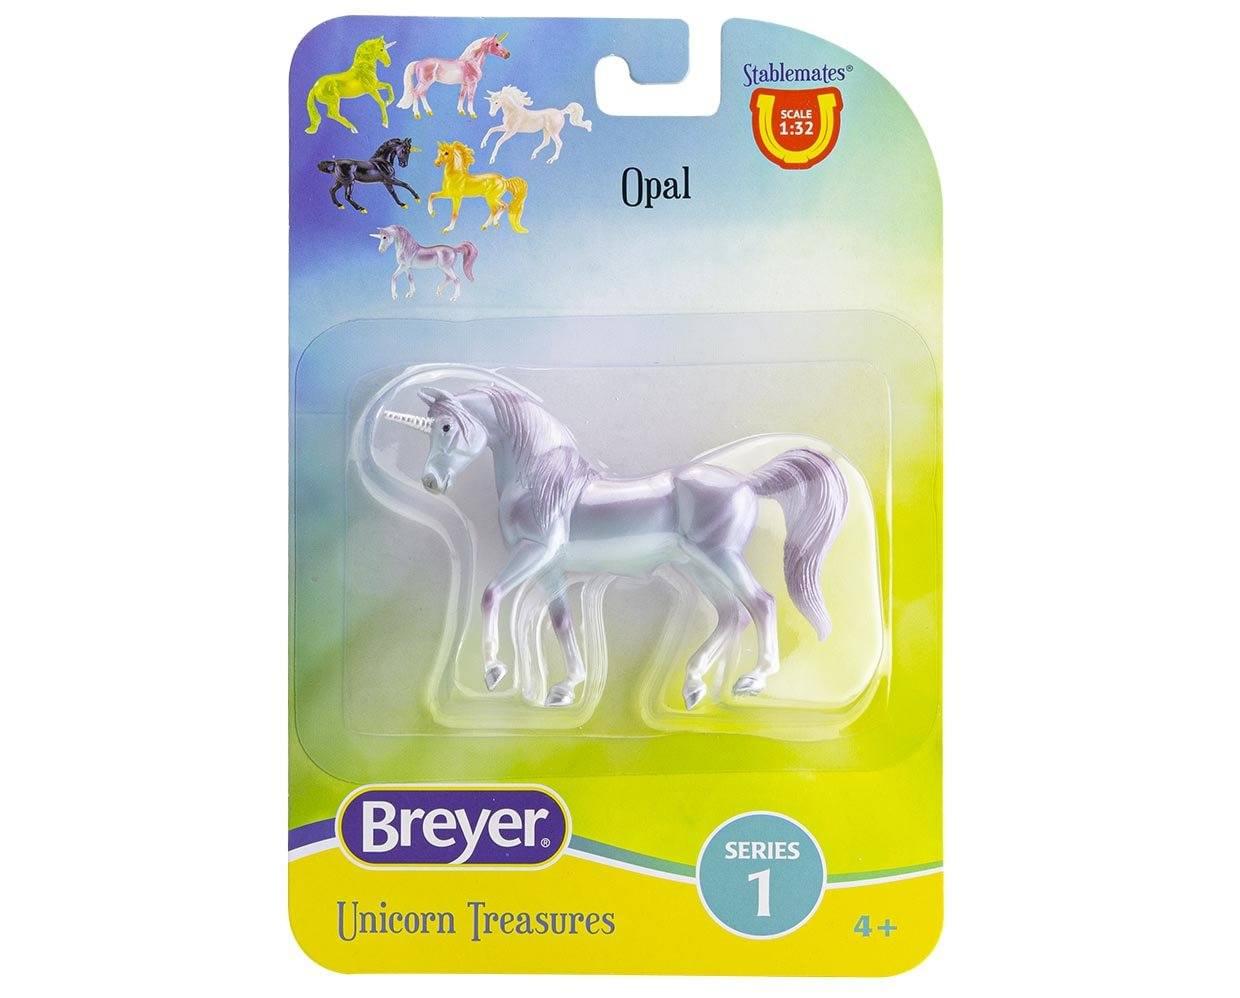 Breyer Unicorn Treasures 1:32 Scale Model Horse | Opal